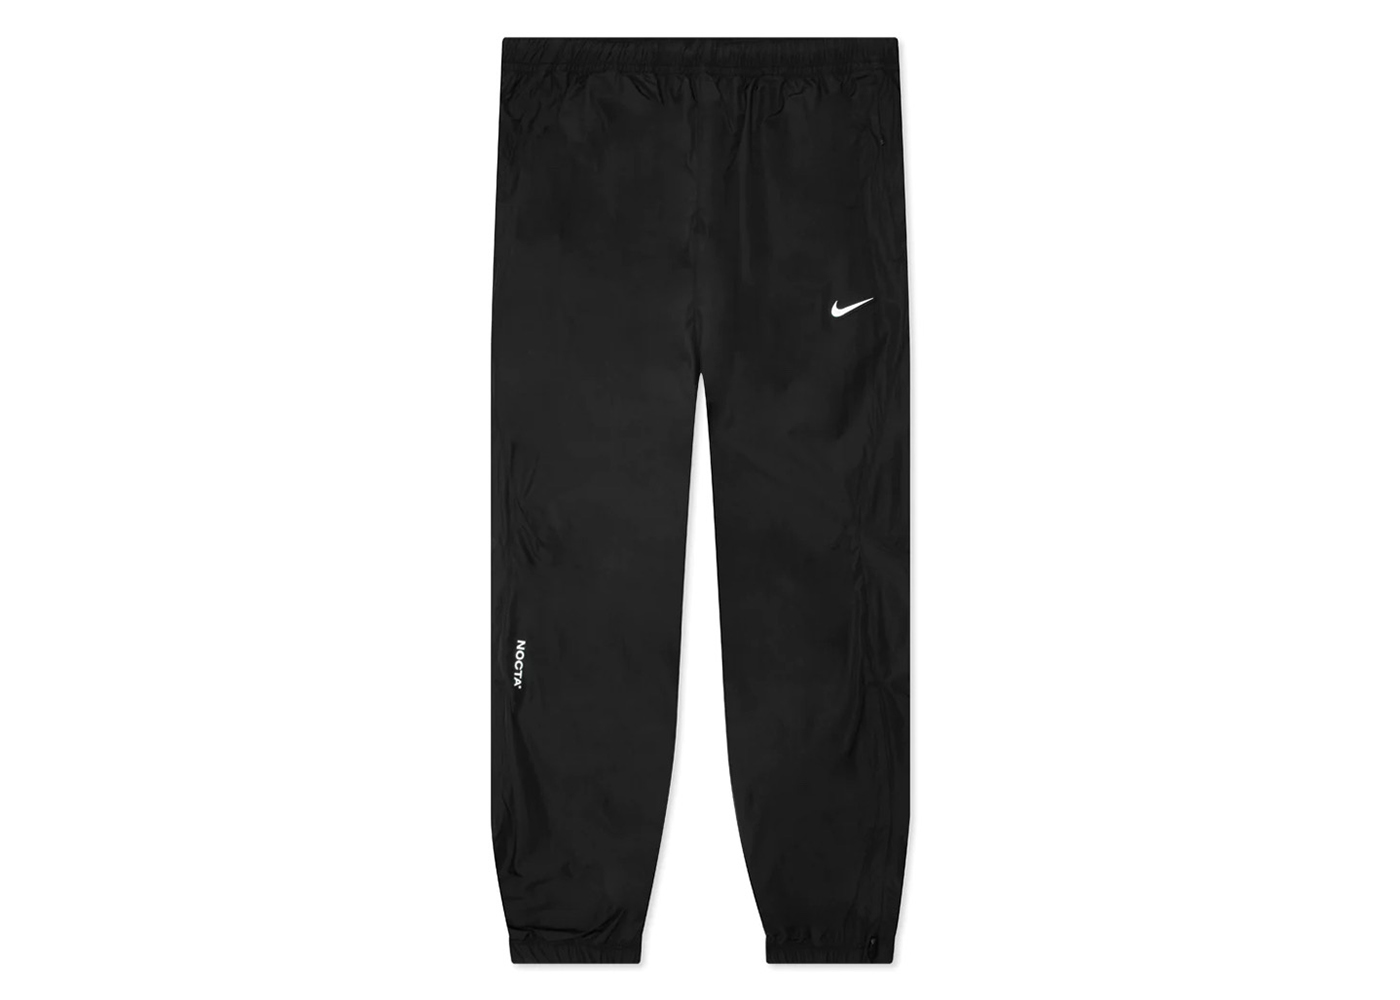 Nike track pants link : r/Pandabuy